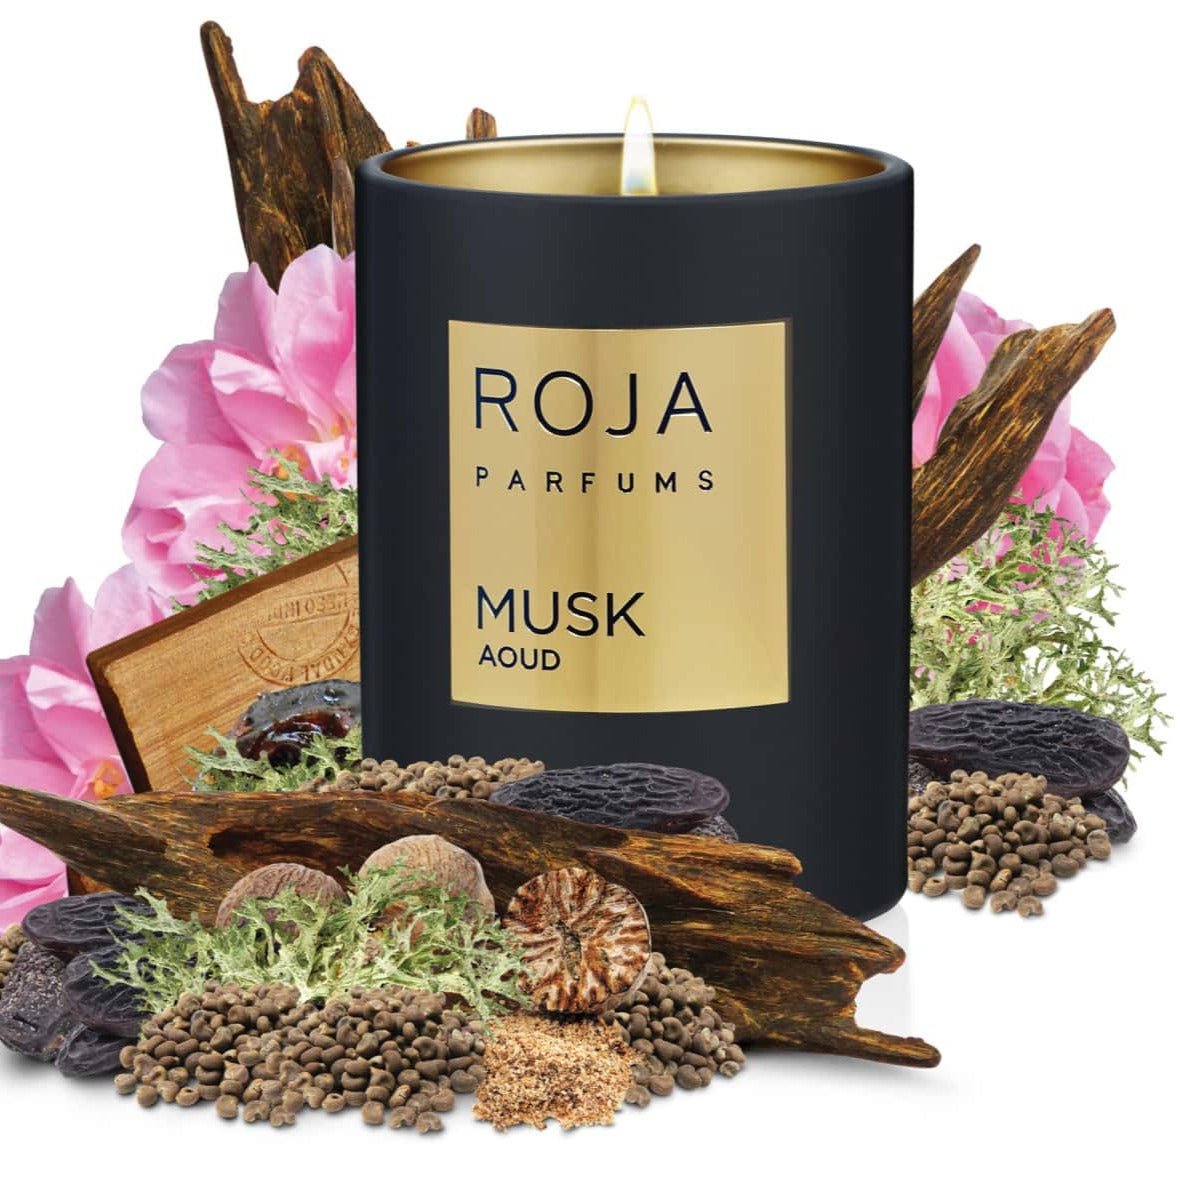 Roja Parfums Musk Aoud Parfum | My Perfume Shop Australia